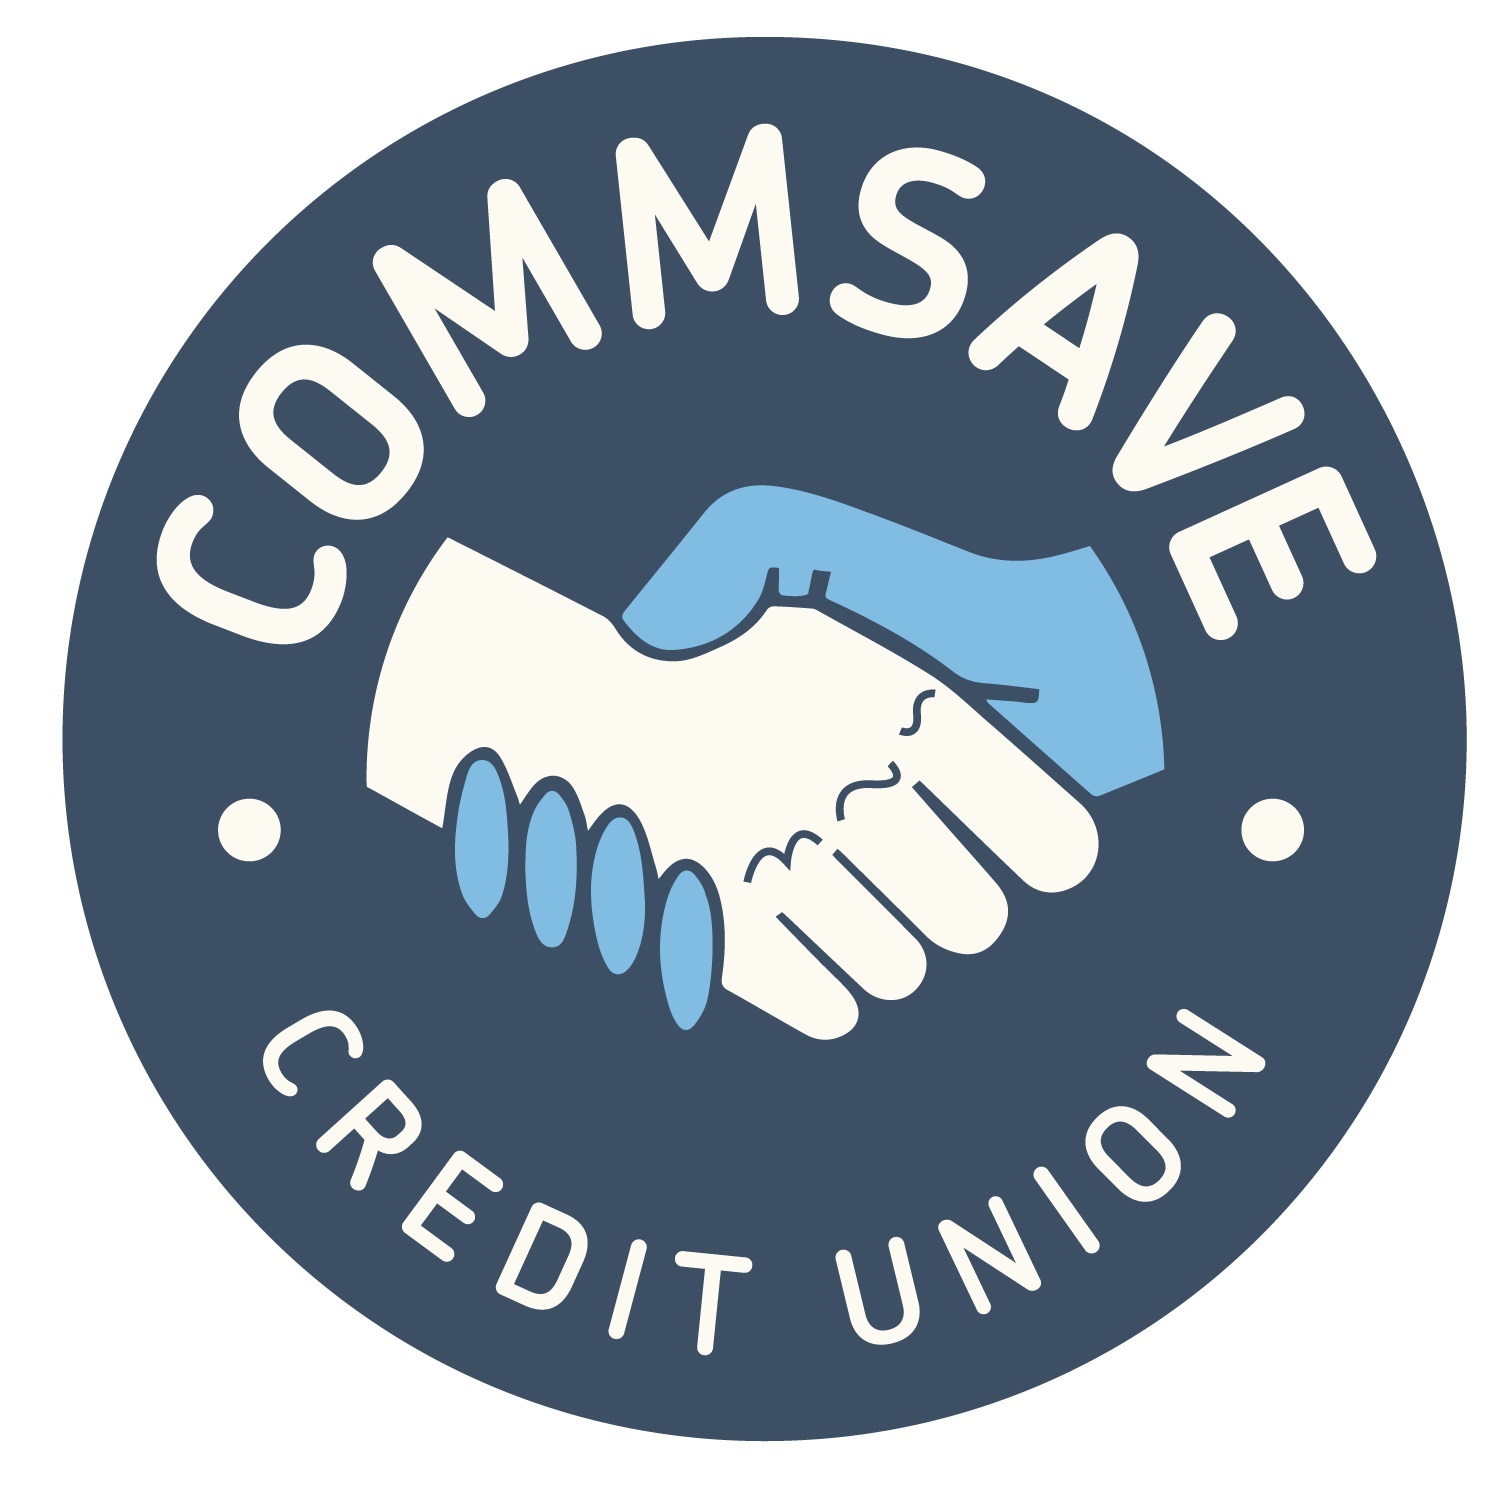 Commsave Credit Union - Logo